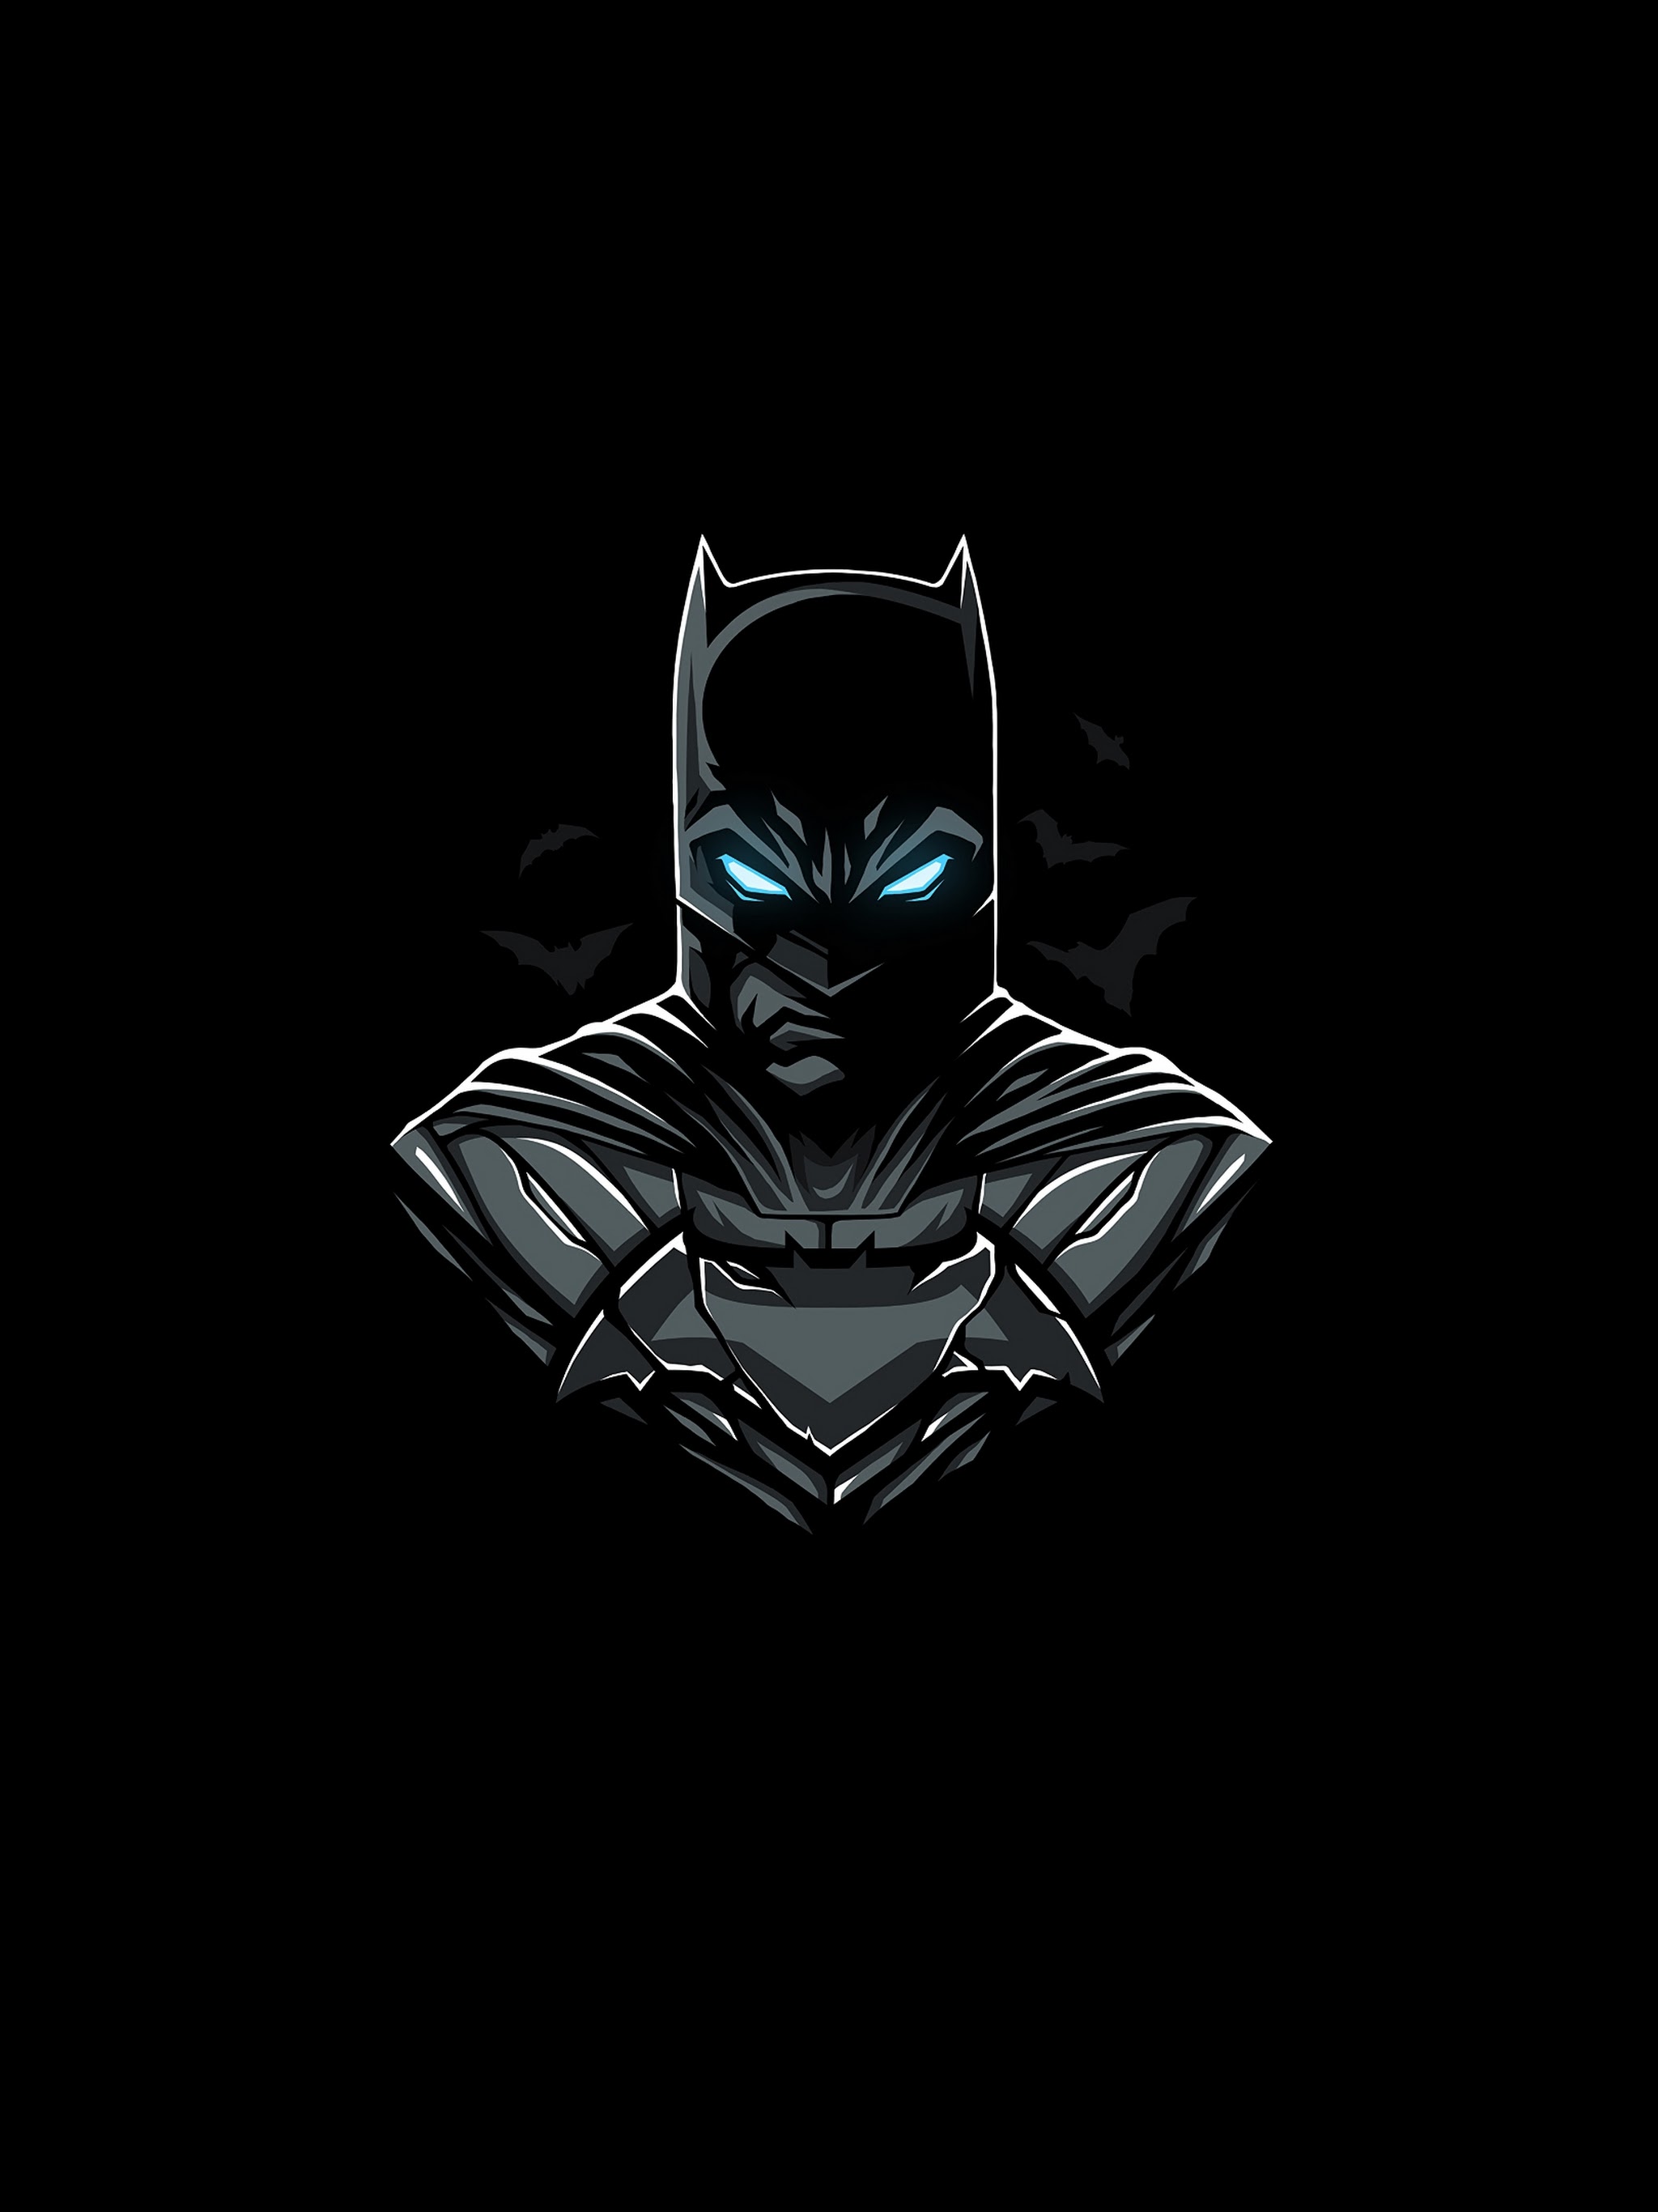 Featured image of post Batman Minimalist Wallpaper Iphone Batman poster batman e superman batman artwork batman robin spiderman art batman wallpaper avengers wallpaper cartoon wallpaper batgirl